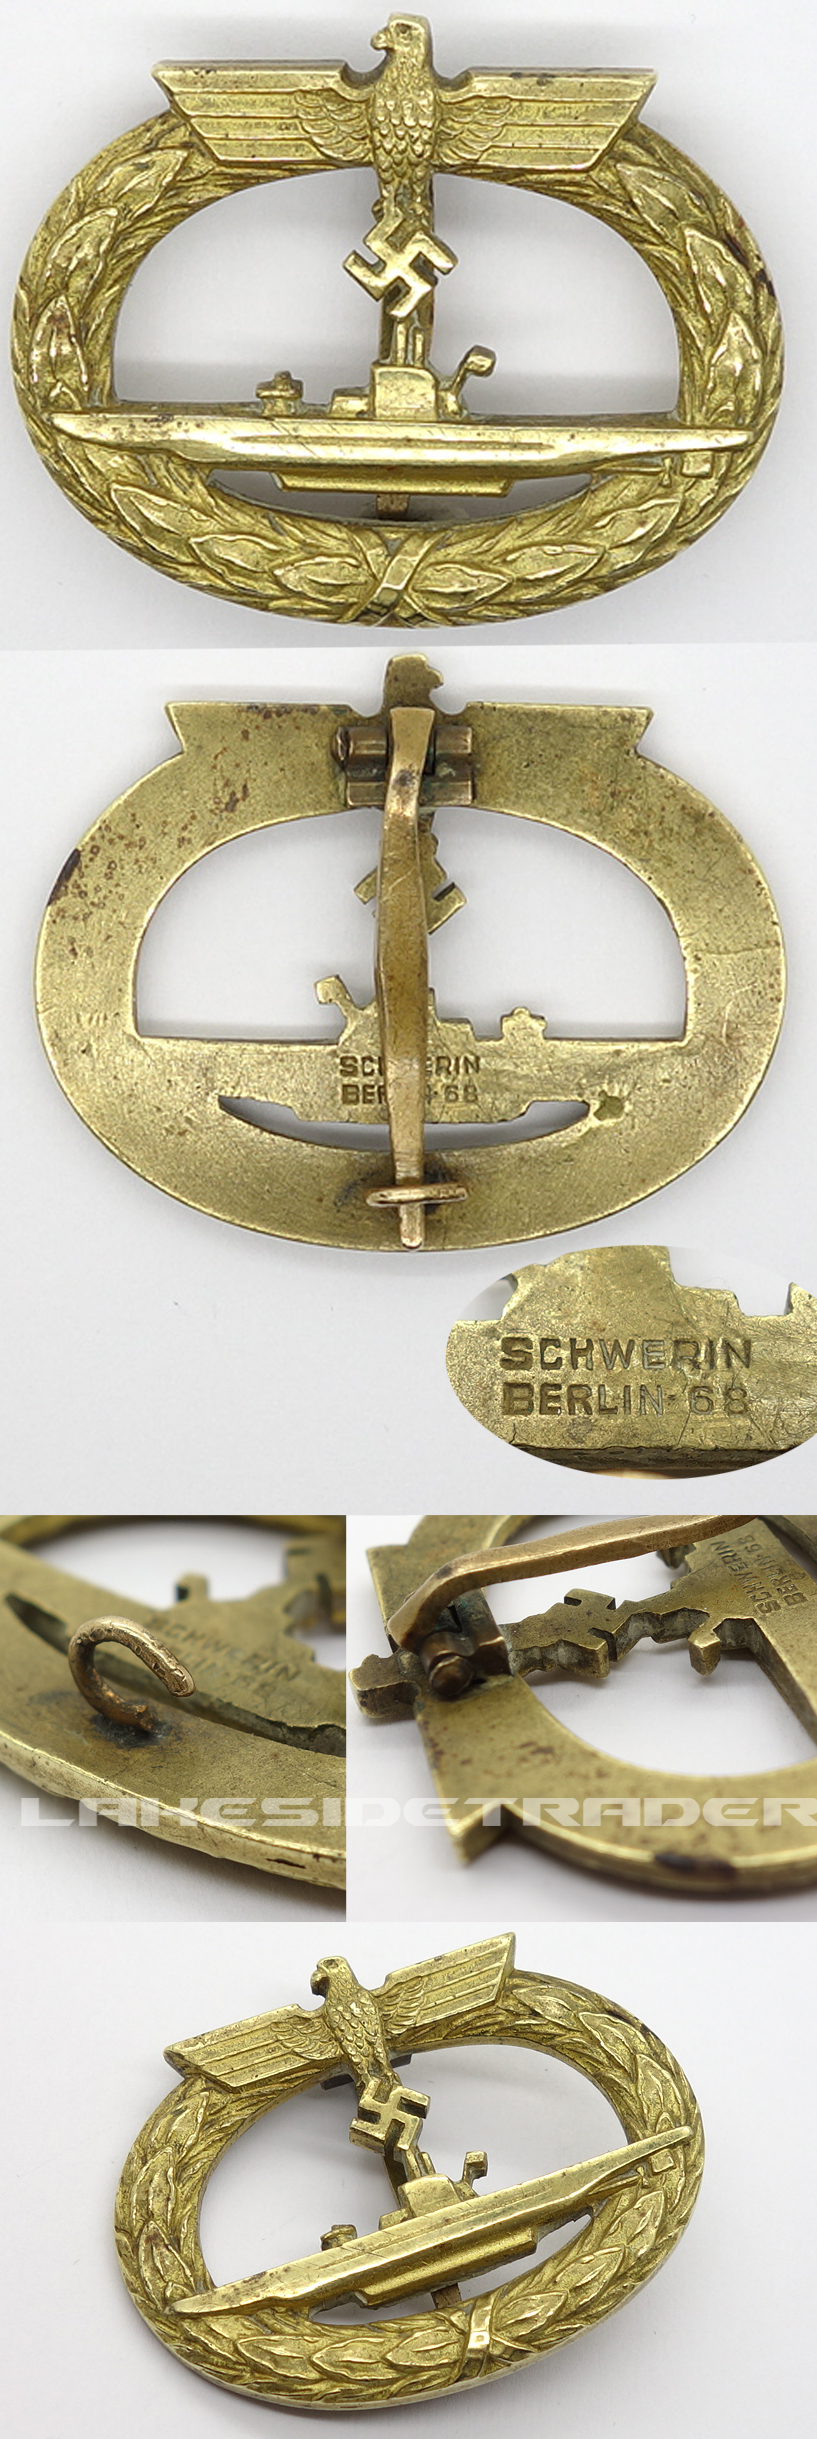 U-Boat Badge by Schwerin & Sohn